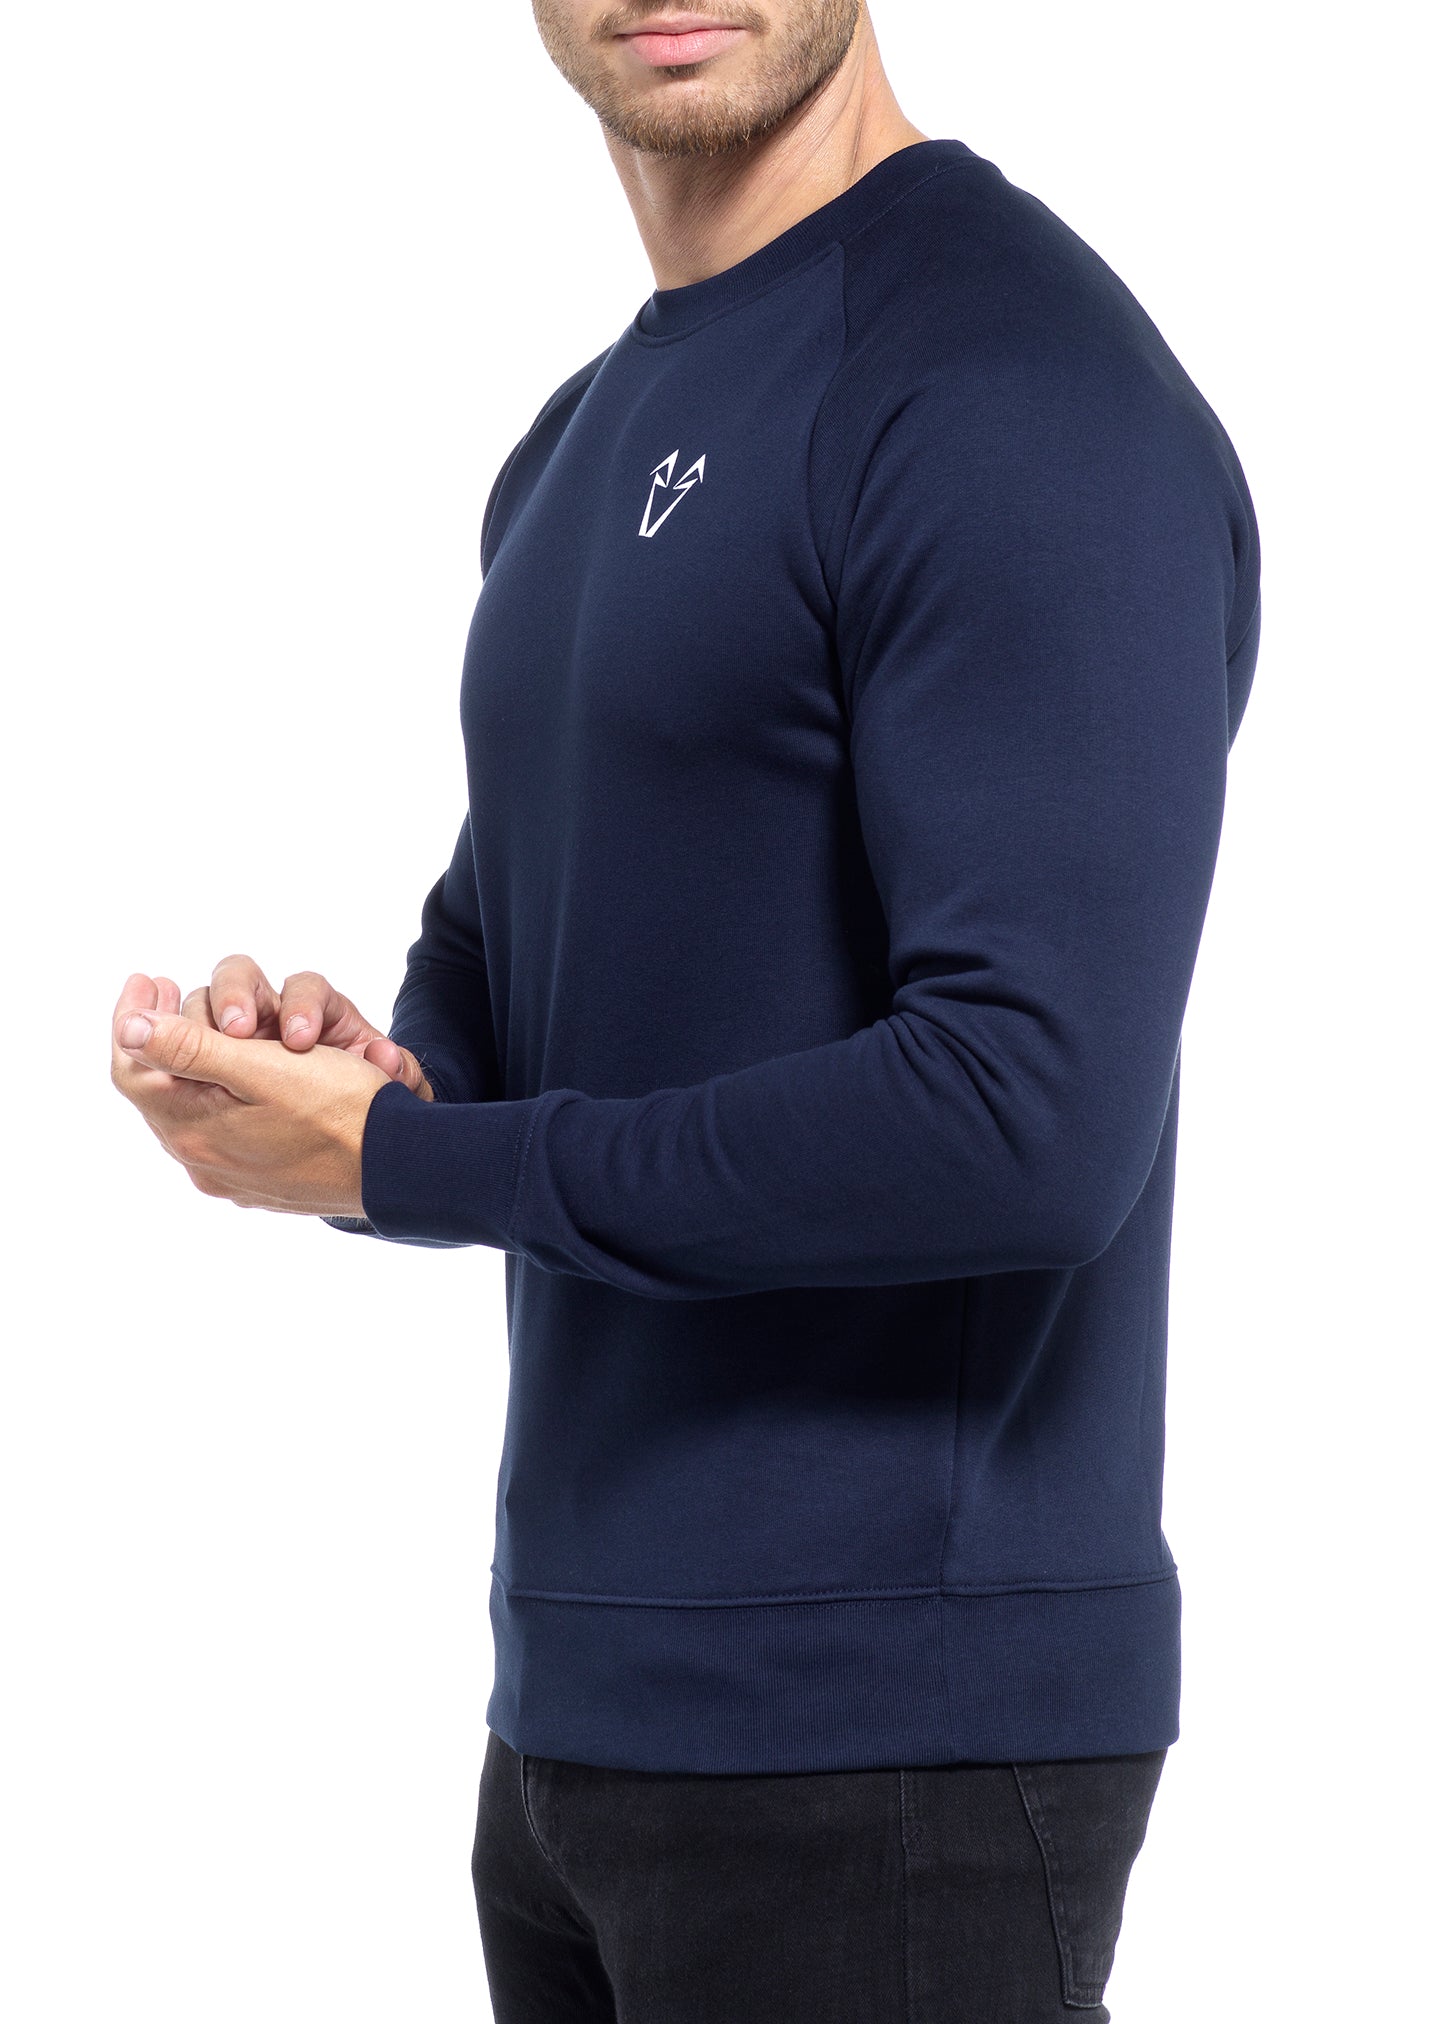 Mens Muscle Fit Navy Sweatshirts